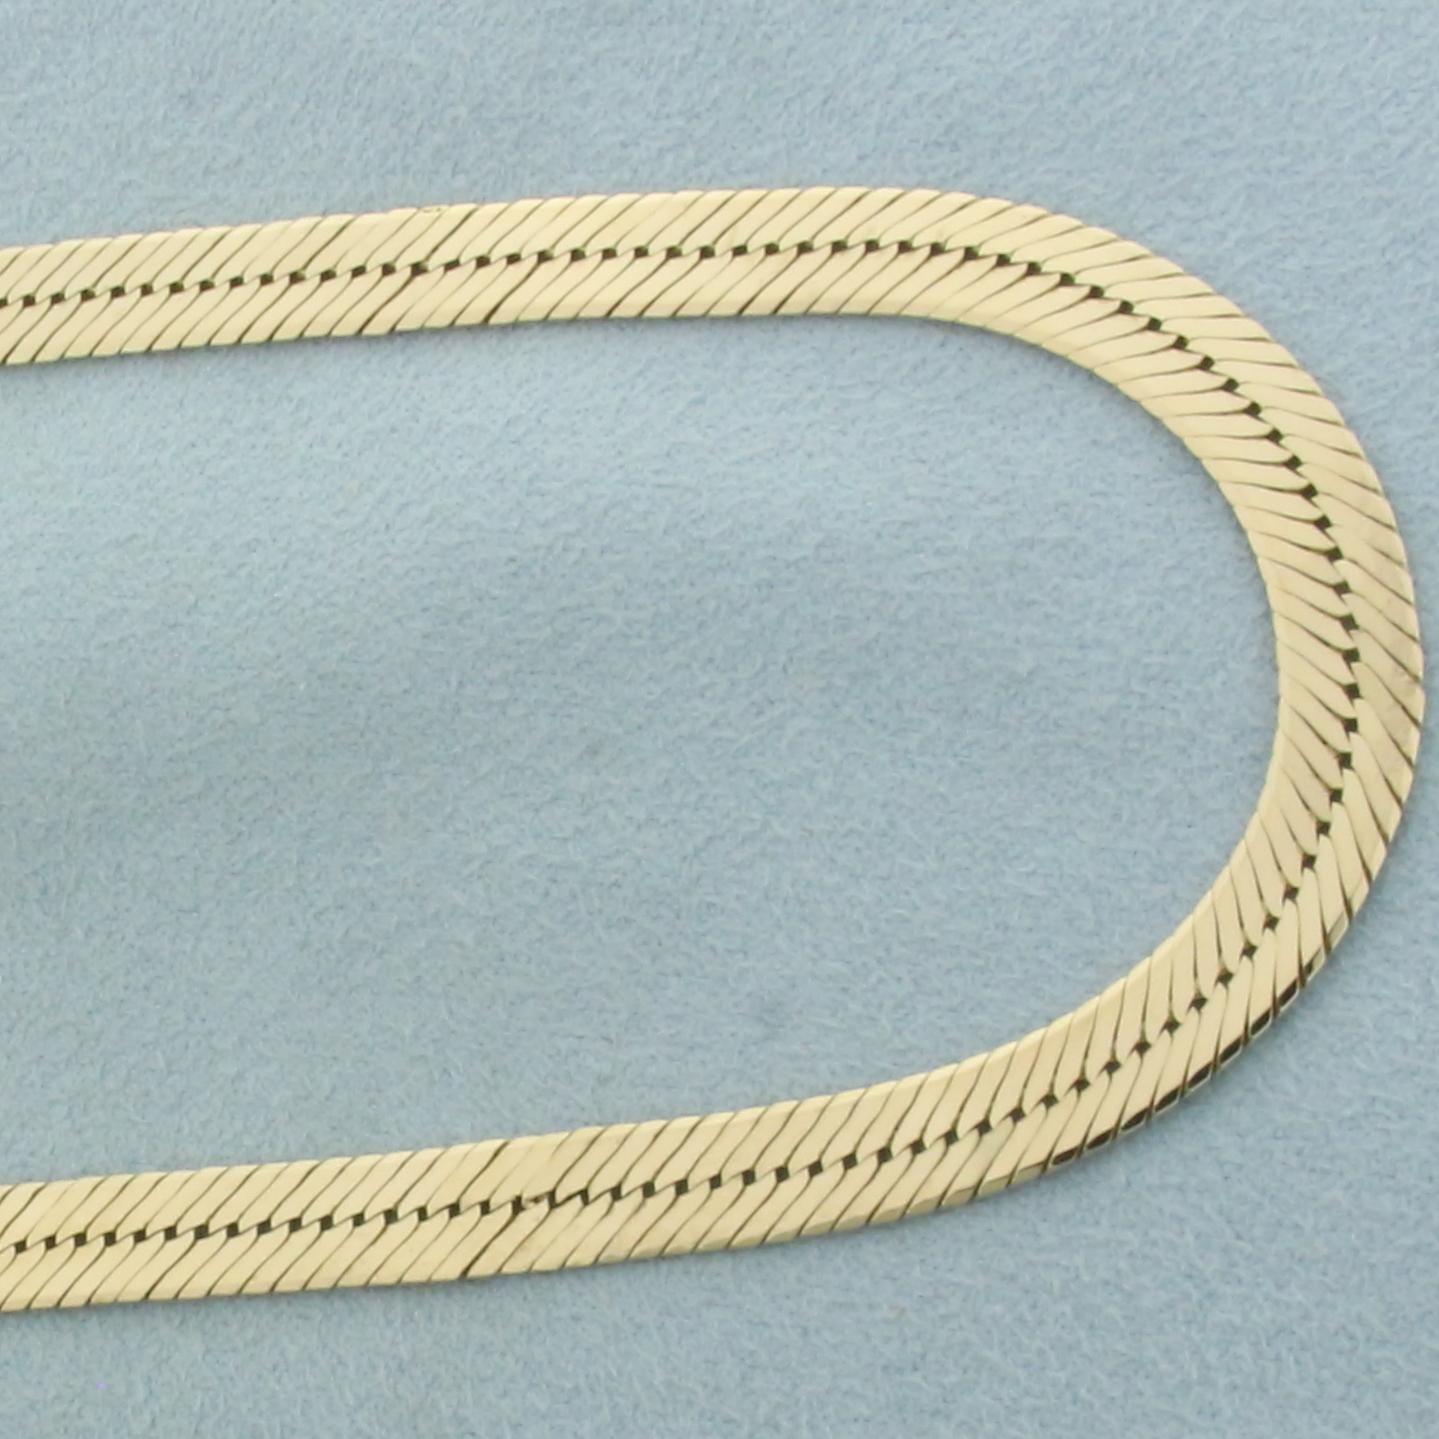 Italian 17 Inch Herringbone Link Chain Necklace In 14k Yellow Gold